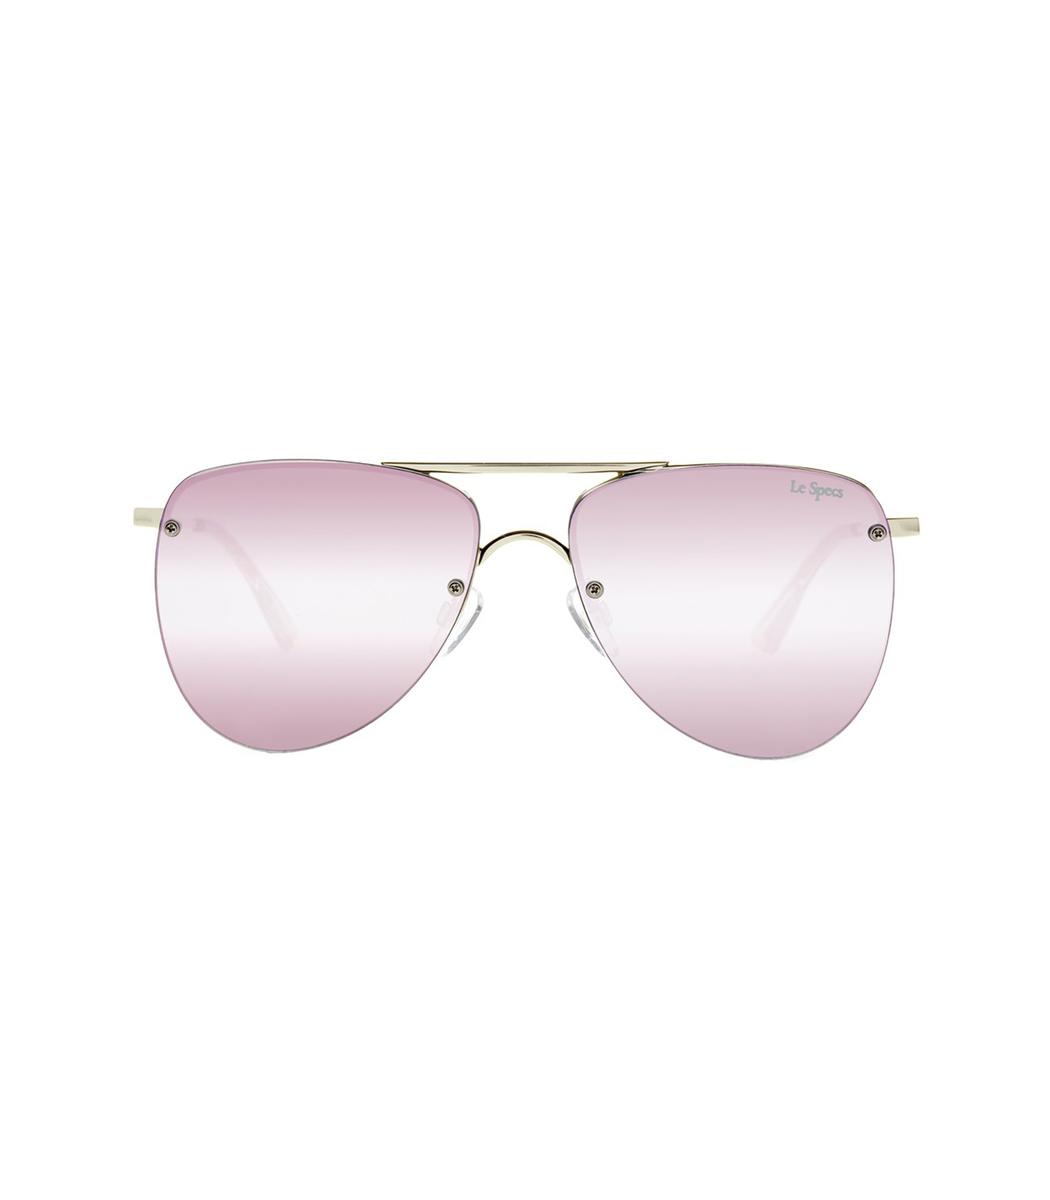 Le Specs Gold/blush The Prince Sunglasses | ModeSens